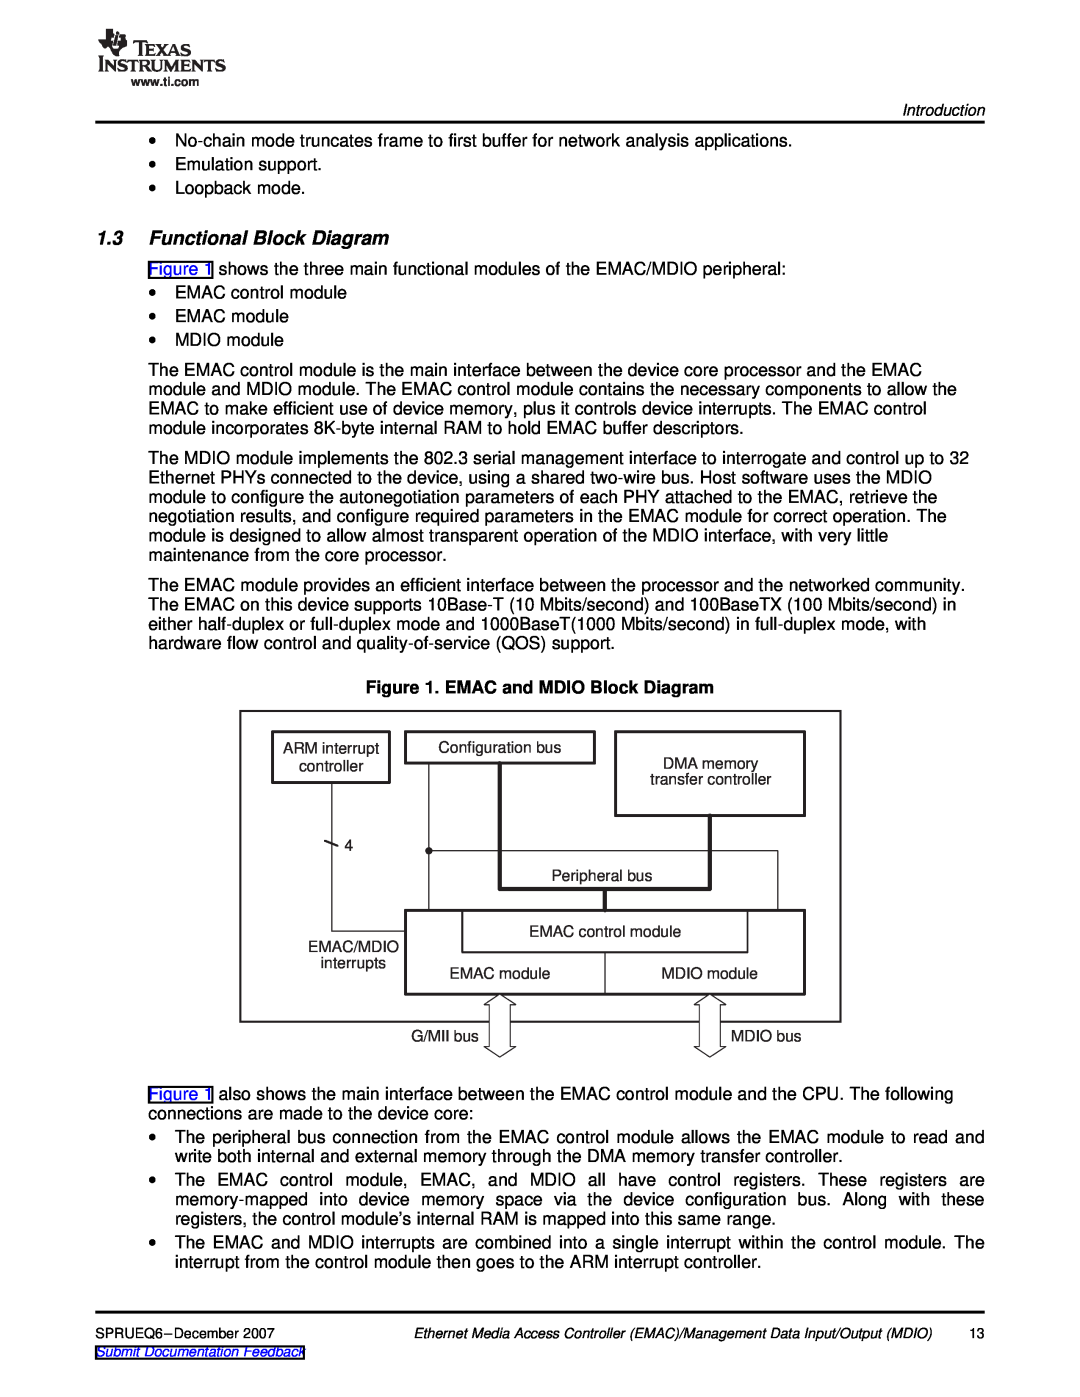 Texas Instruments TMS320DM646x manual Functional Block Diagram, EMAC and MDIO Block Diagram 